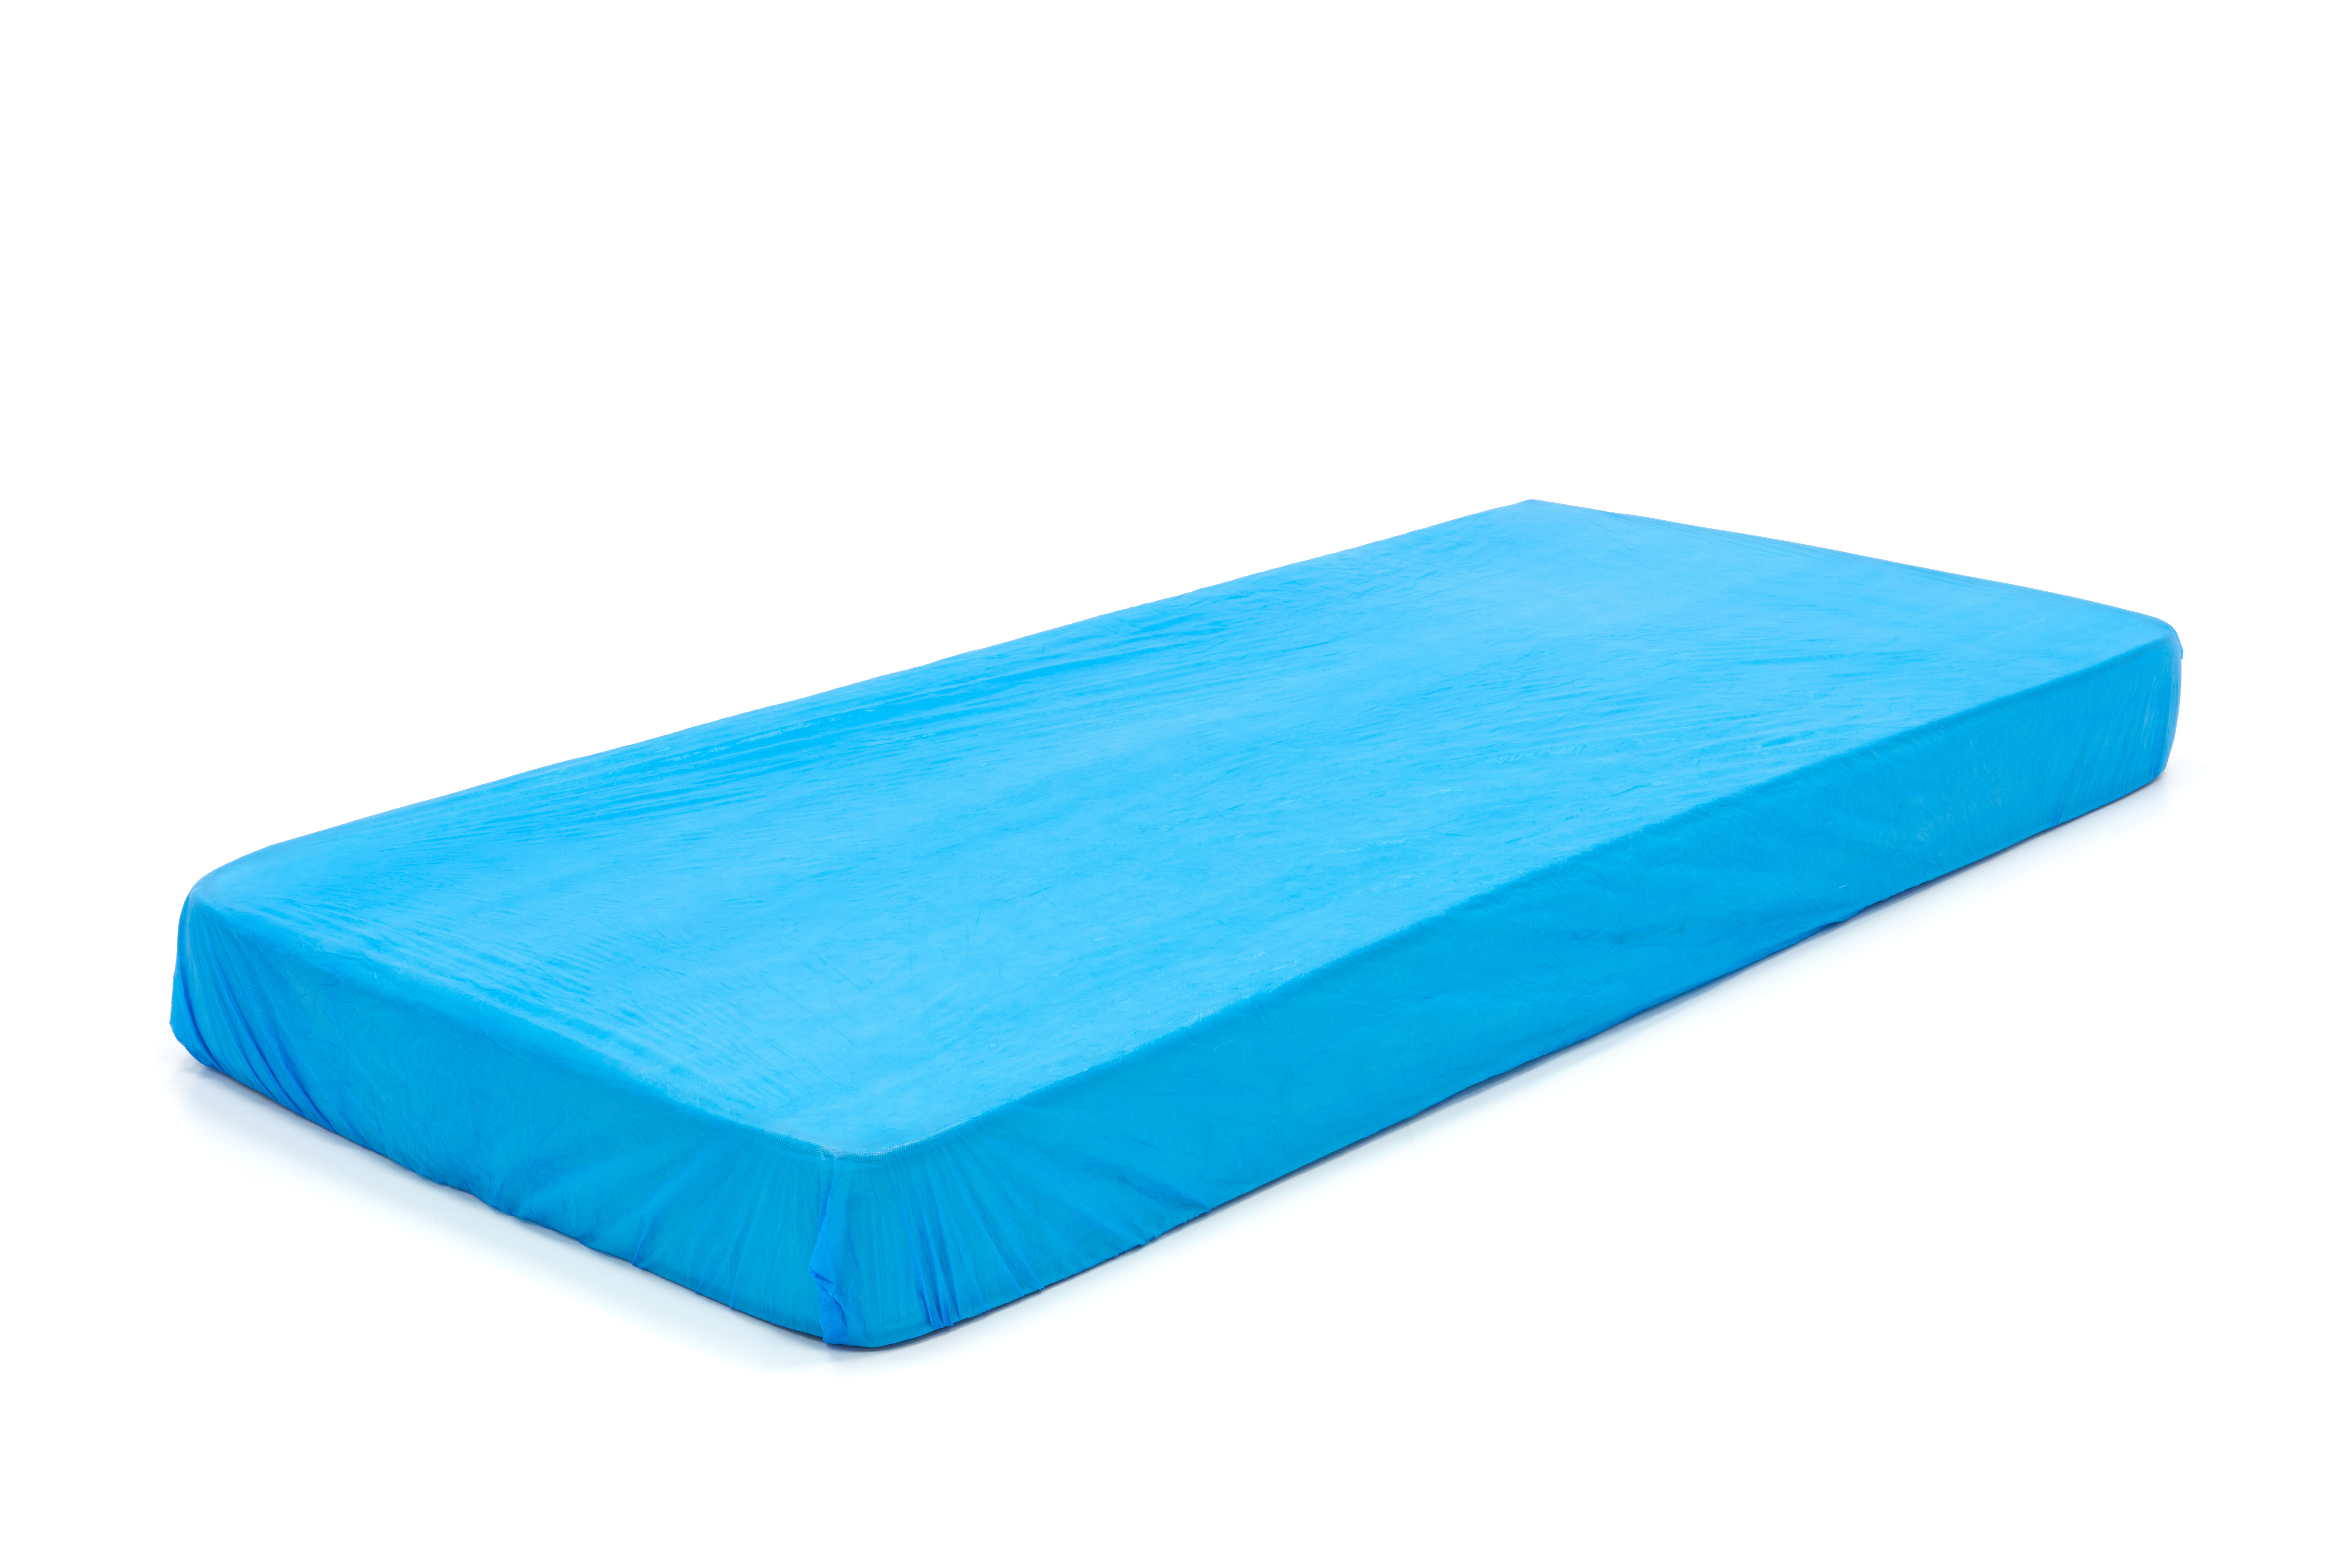 MC-100 Romed CPE mattress covers, blue, Size: 210x90x20cm, embossed, per 10 pcs in a bundle, 10 x 10 pcs = 100 pcs in a carton.